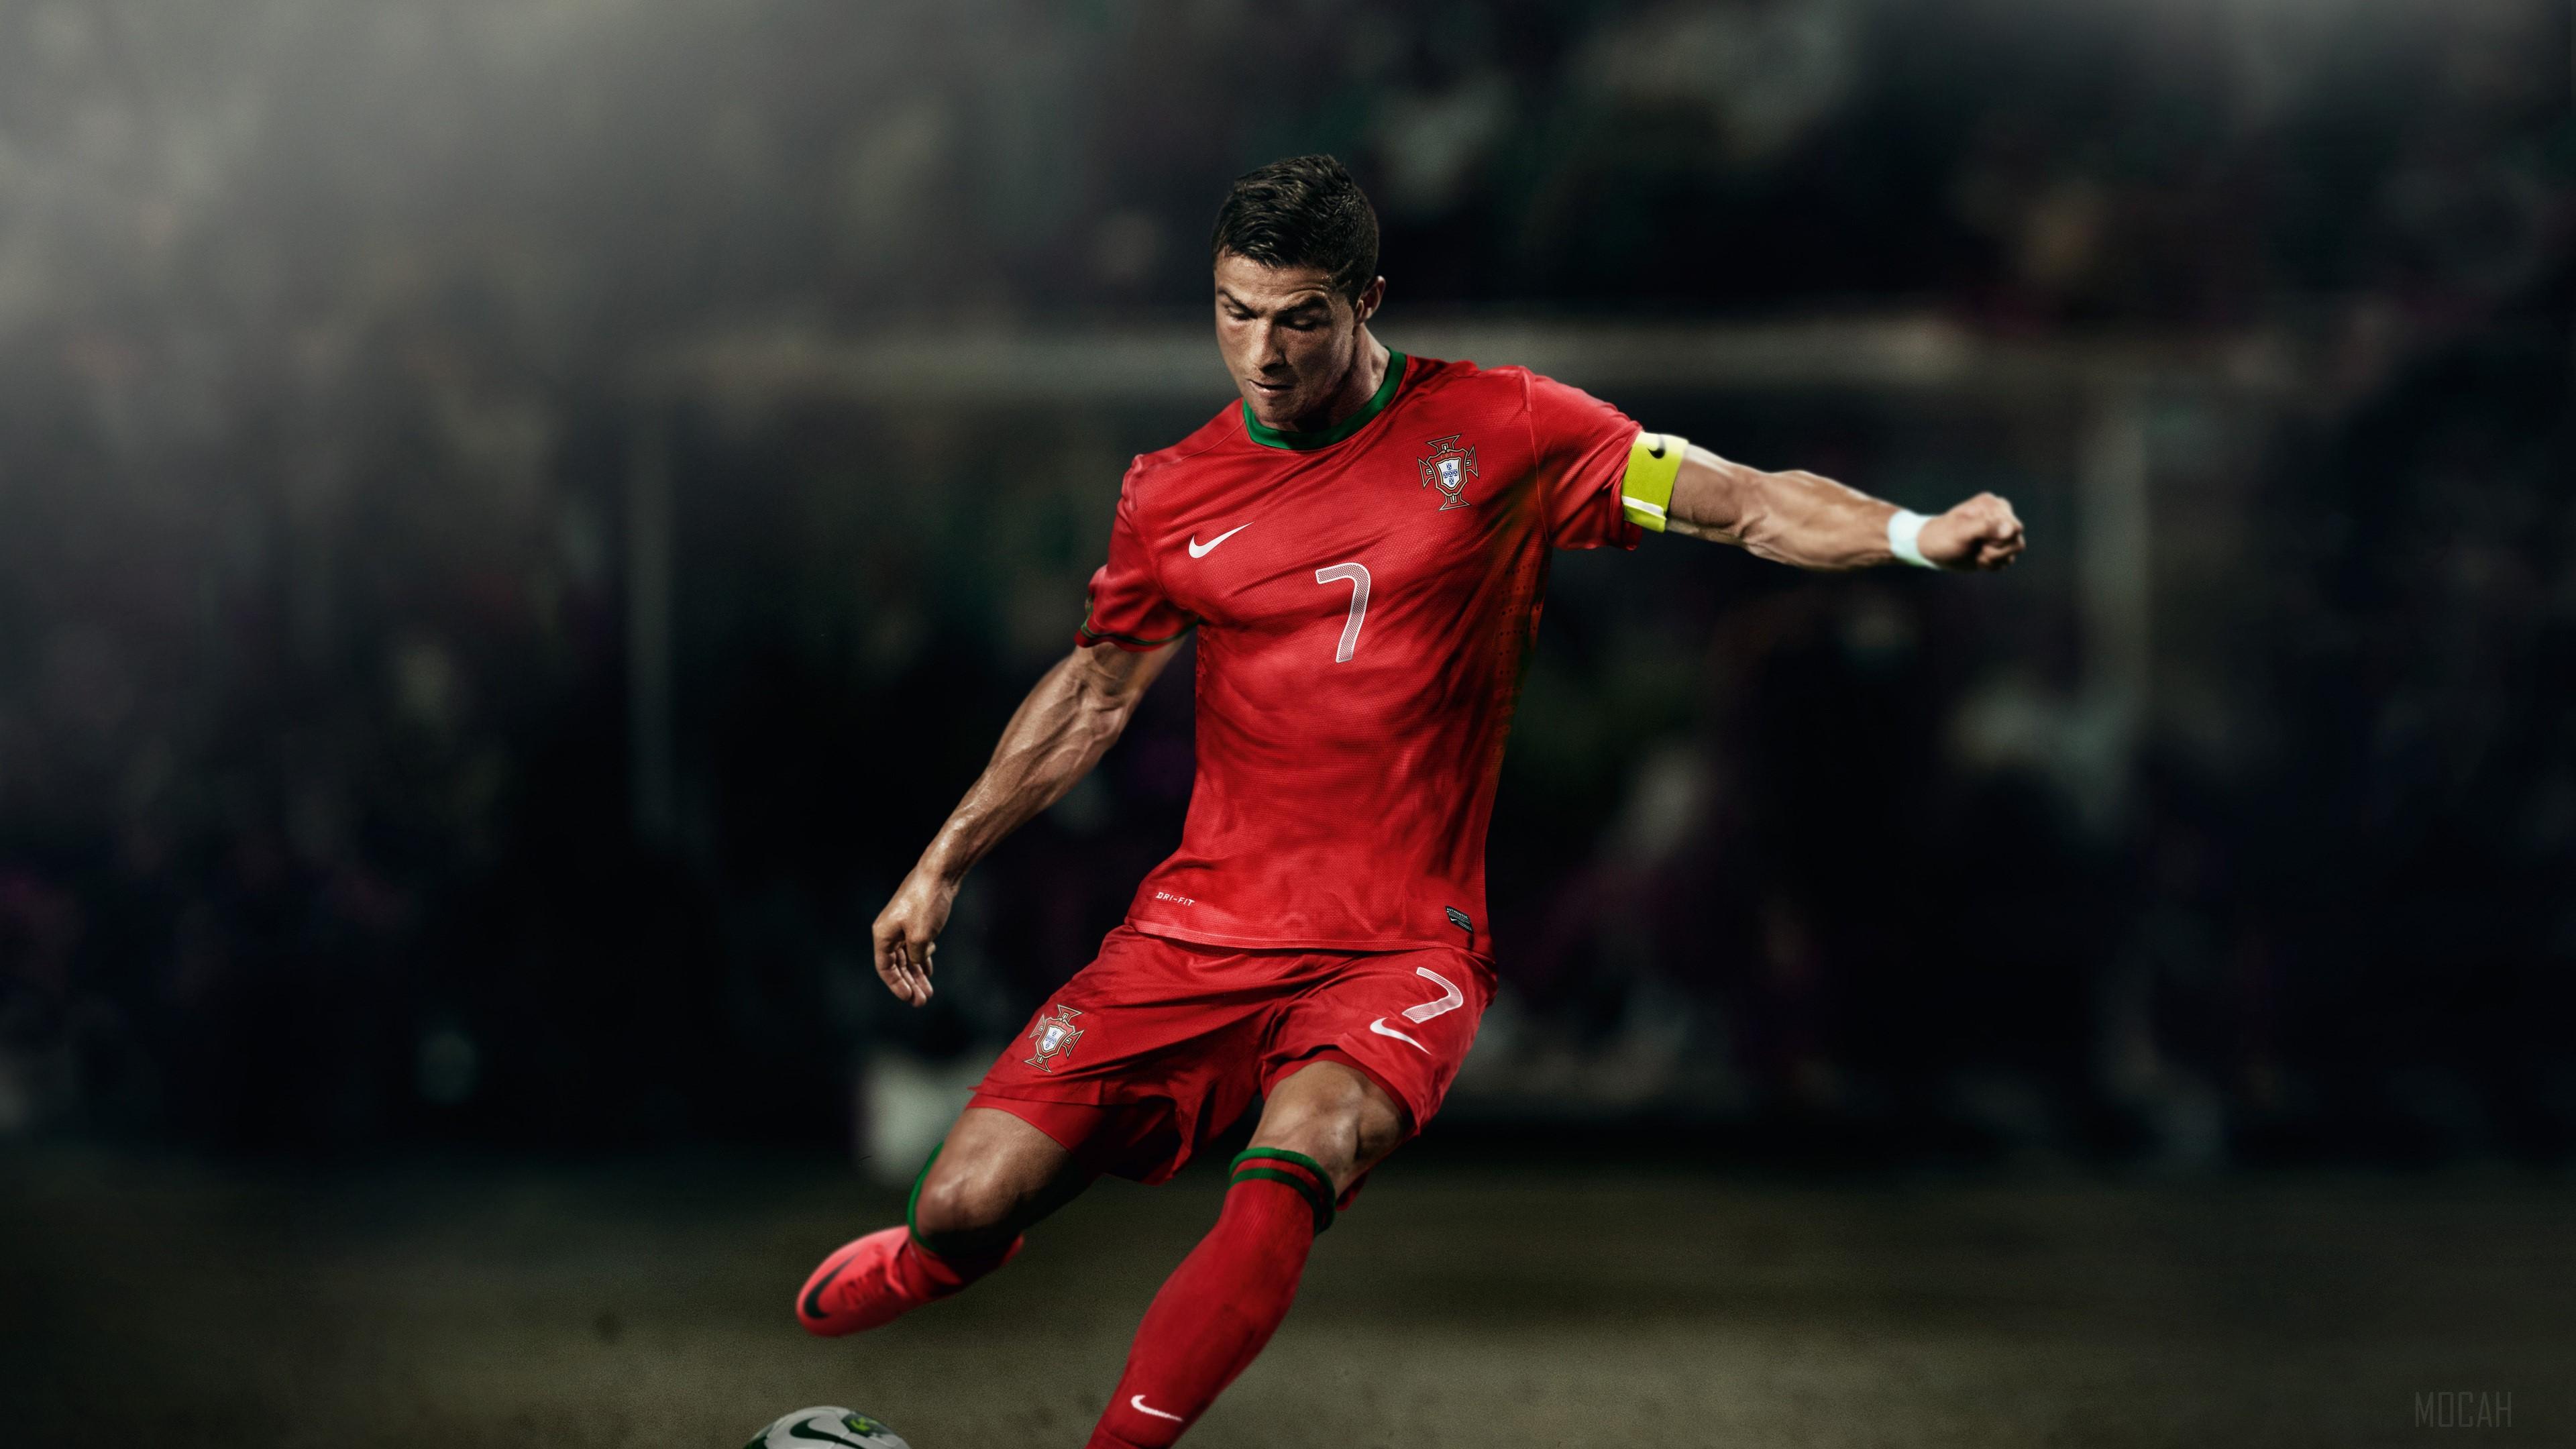 HD wallpaper, Cristiano Ronaldo Soccer Player 4K